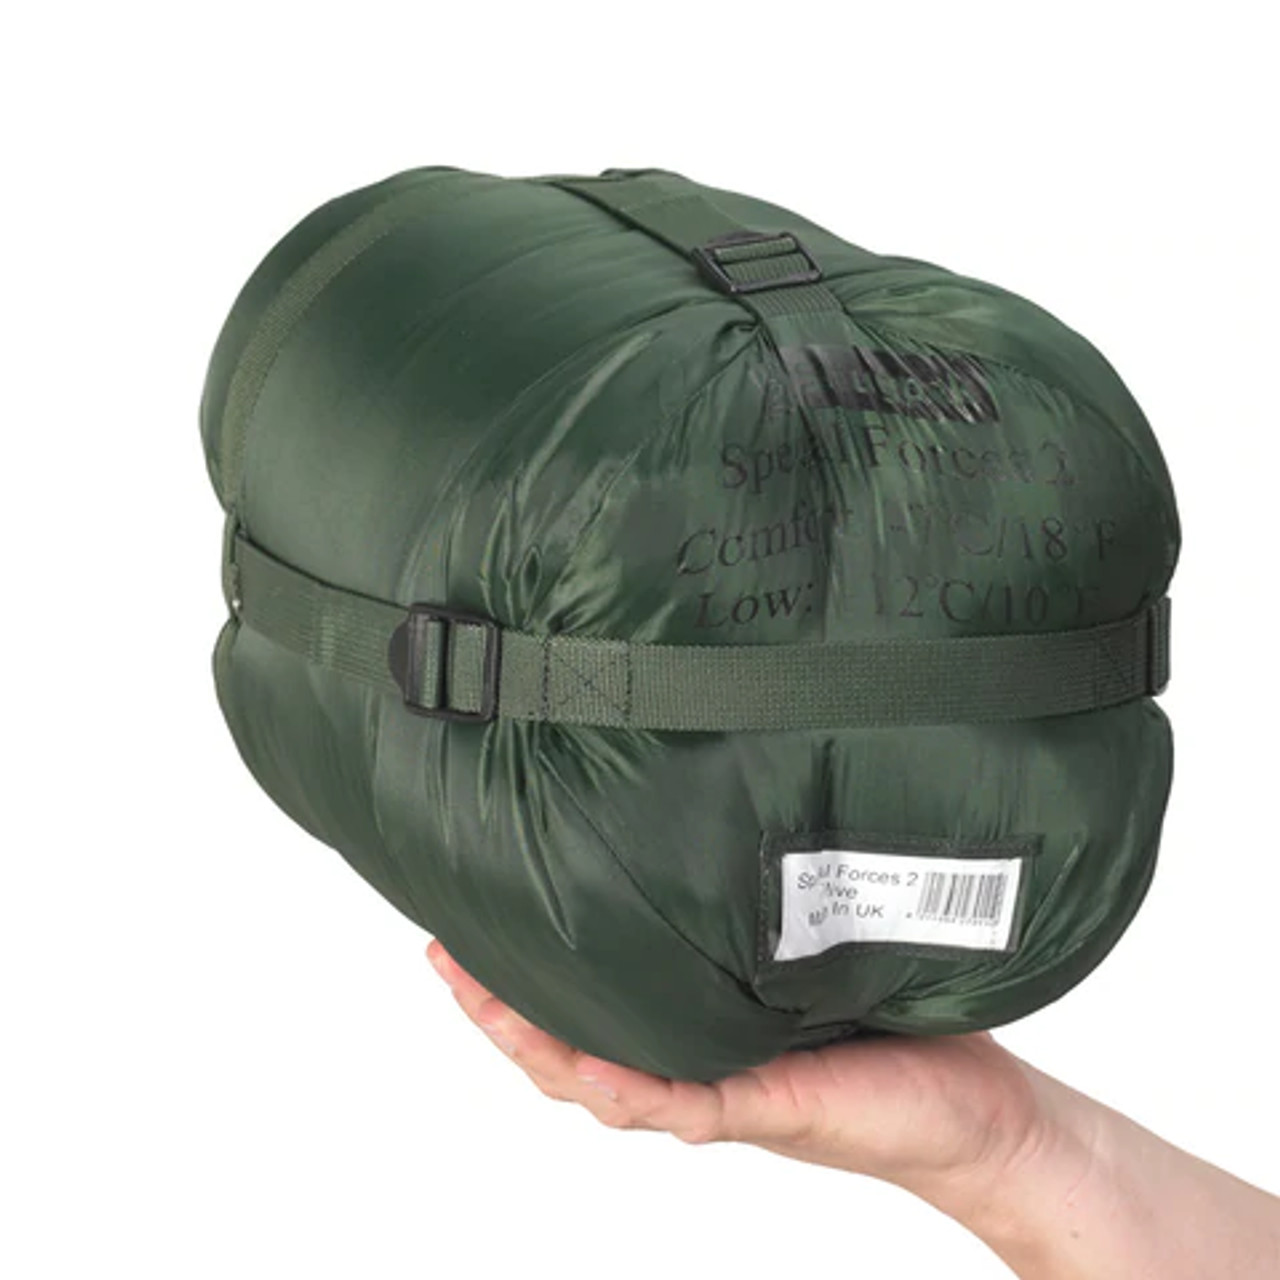 Snugpak Special Forces 2 Center Zip Sleeping Bag UK Made